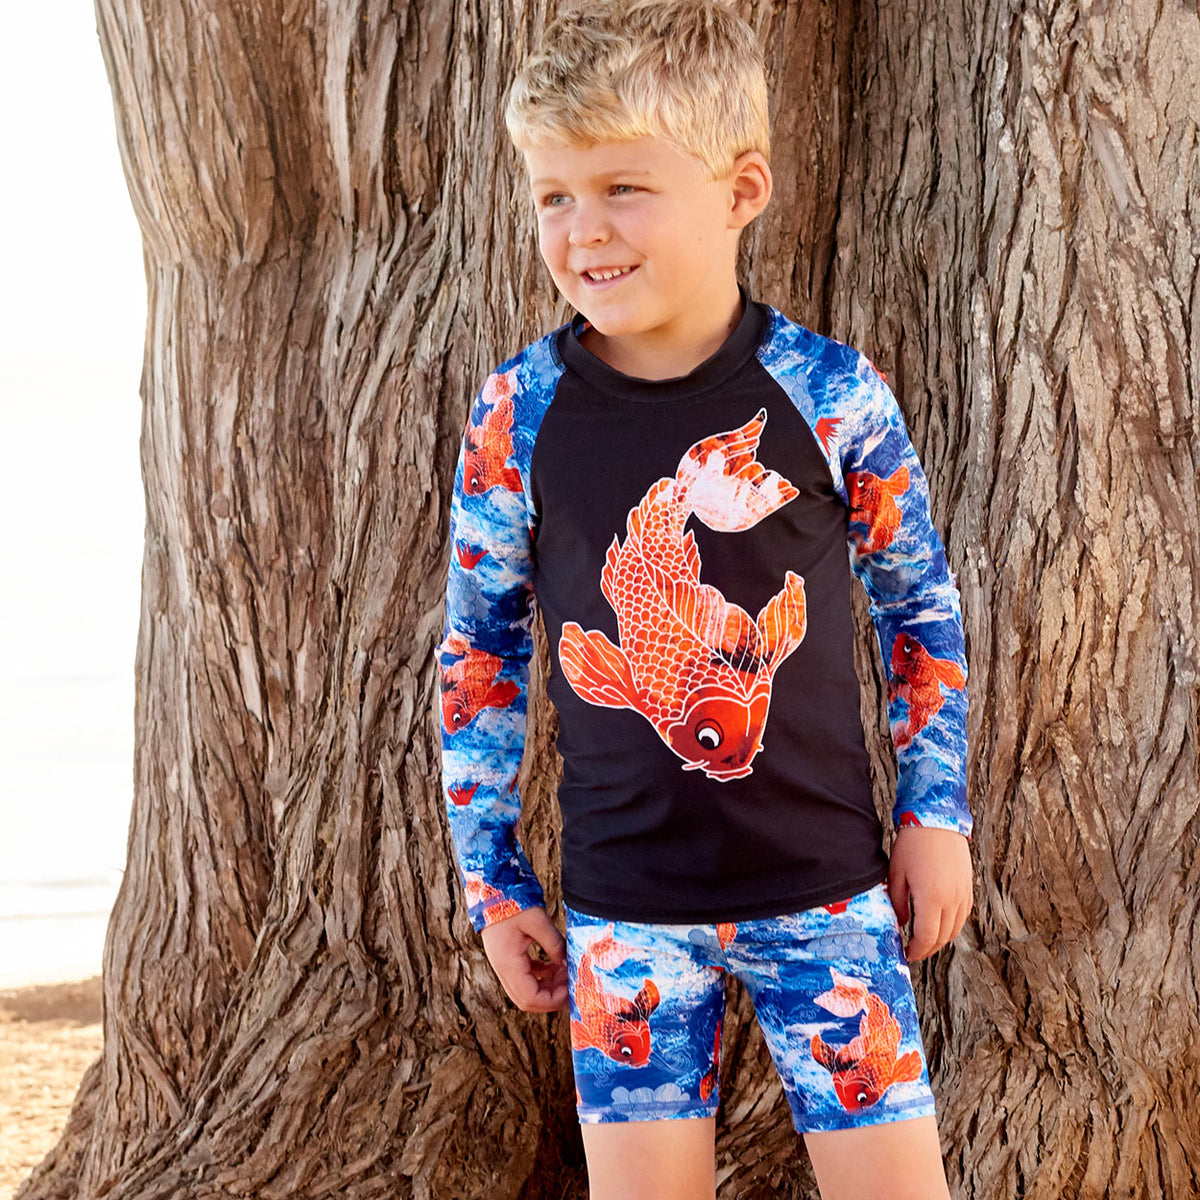 Koi Fish Sunblocker Shorts Upf50 Kids Boys Size 2 12 White Blue Orange Boy At The Beach In Front Of A Tree Sunpoplife